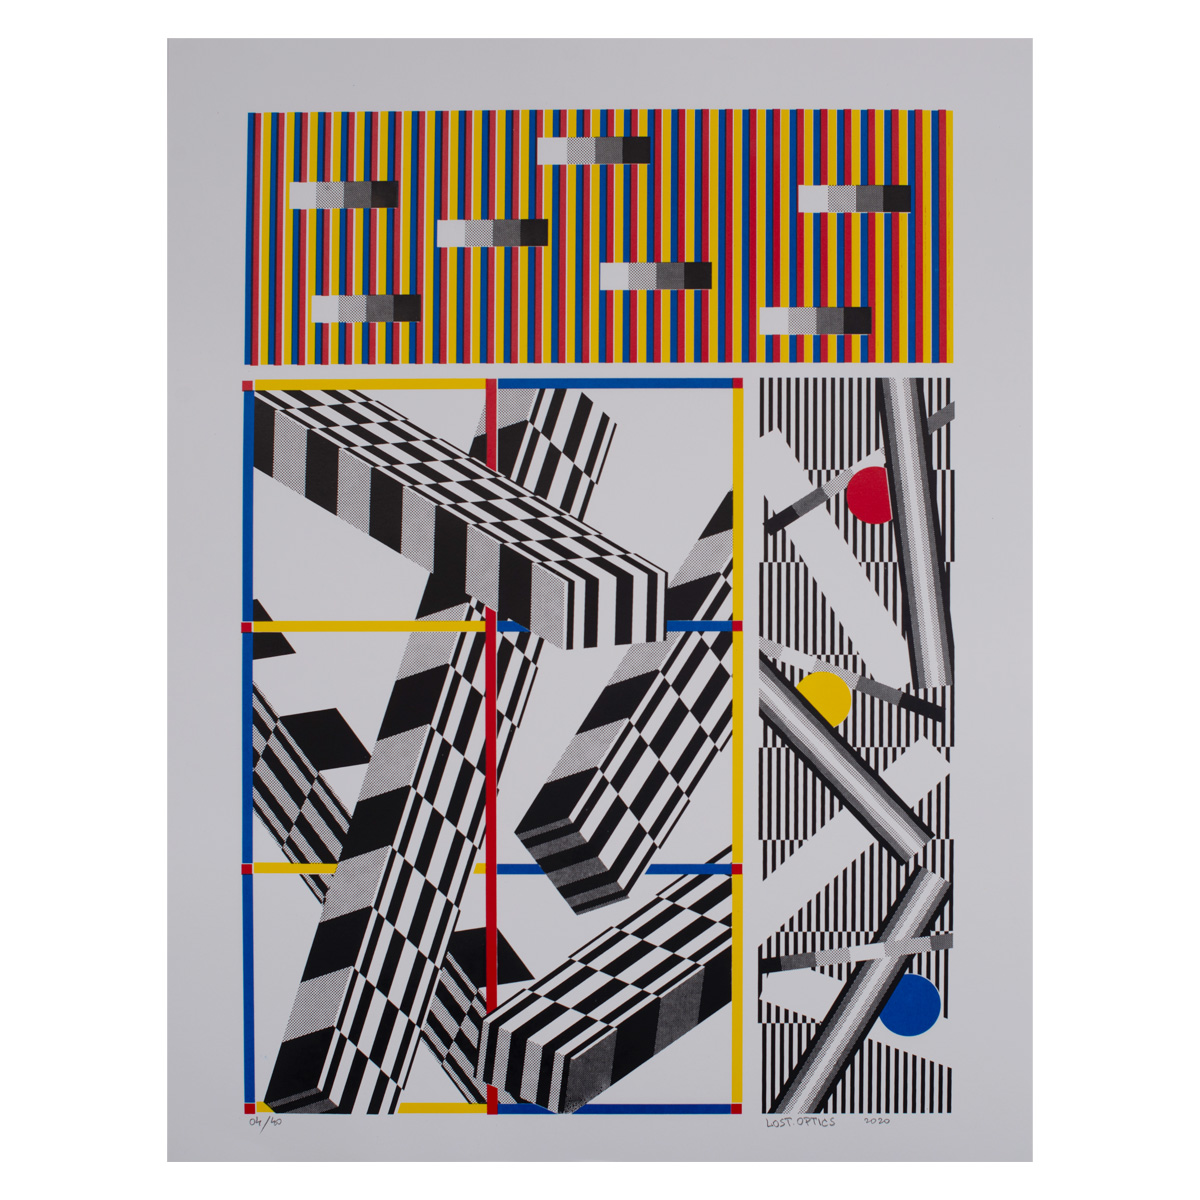 4 colors hand printed screenprint on Fedrigoni ArcoDesign 460gr/sqm, edition of 40+4AP